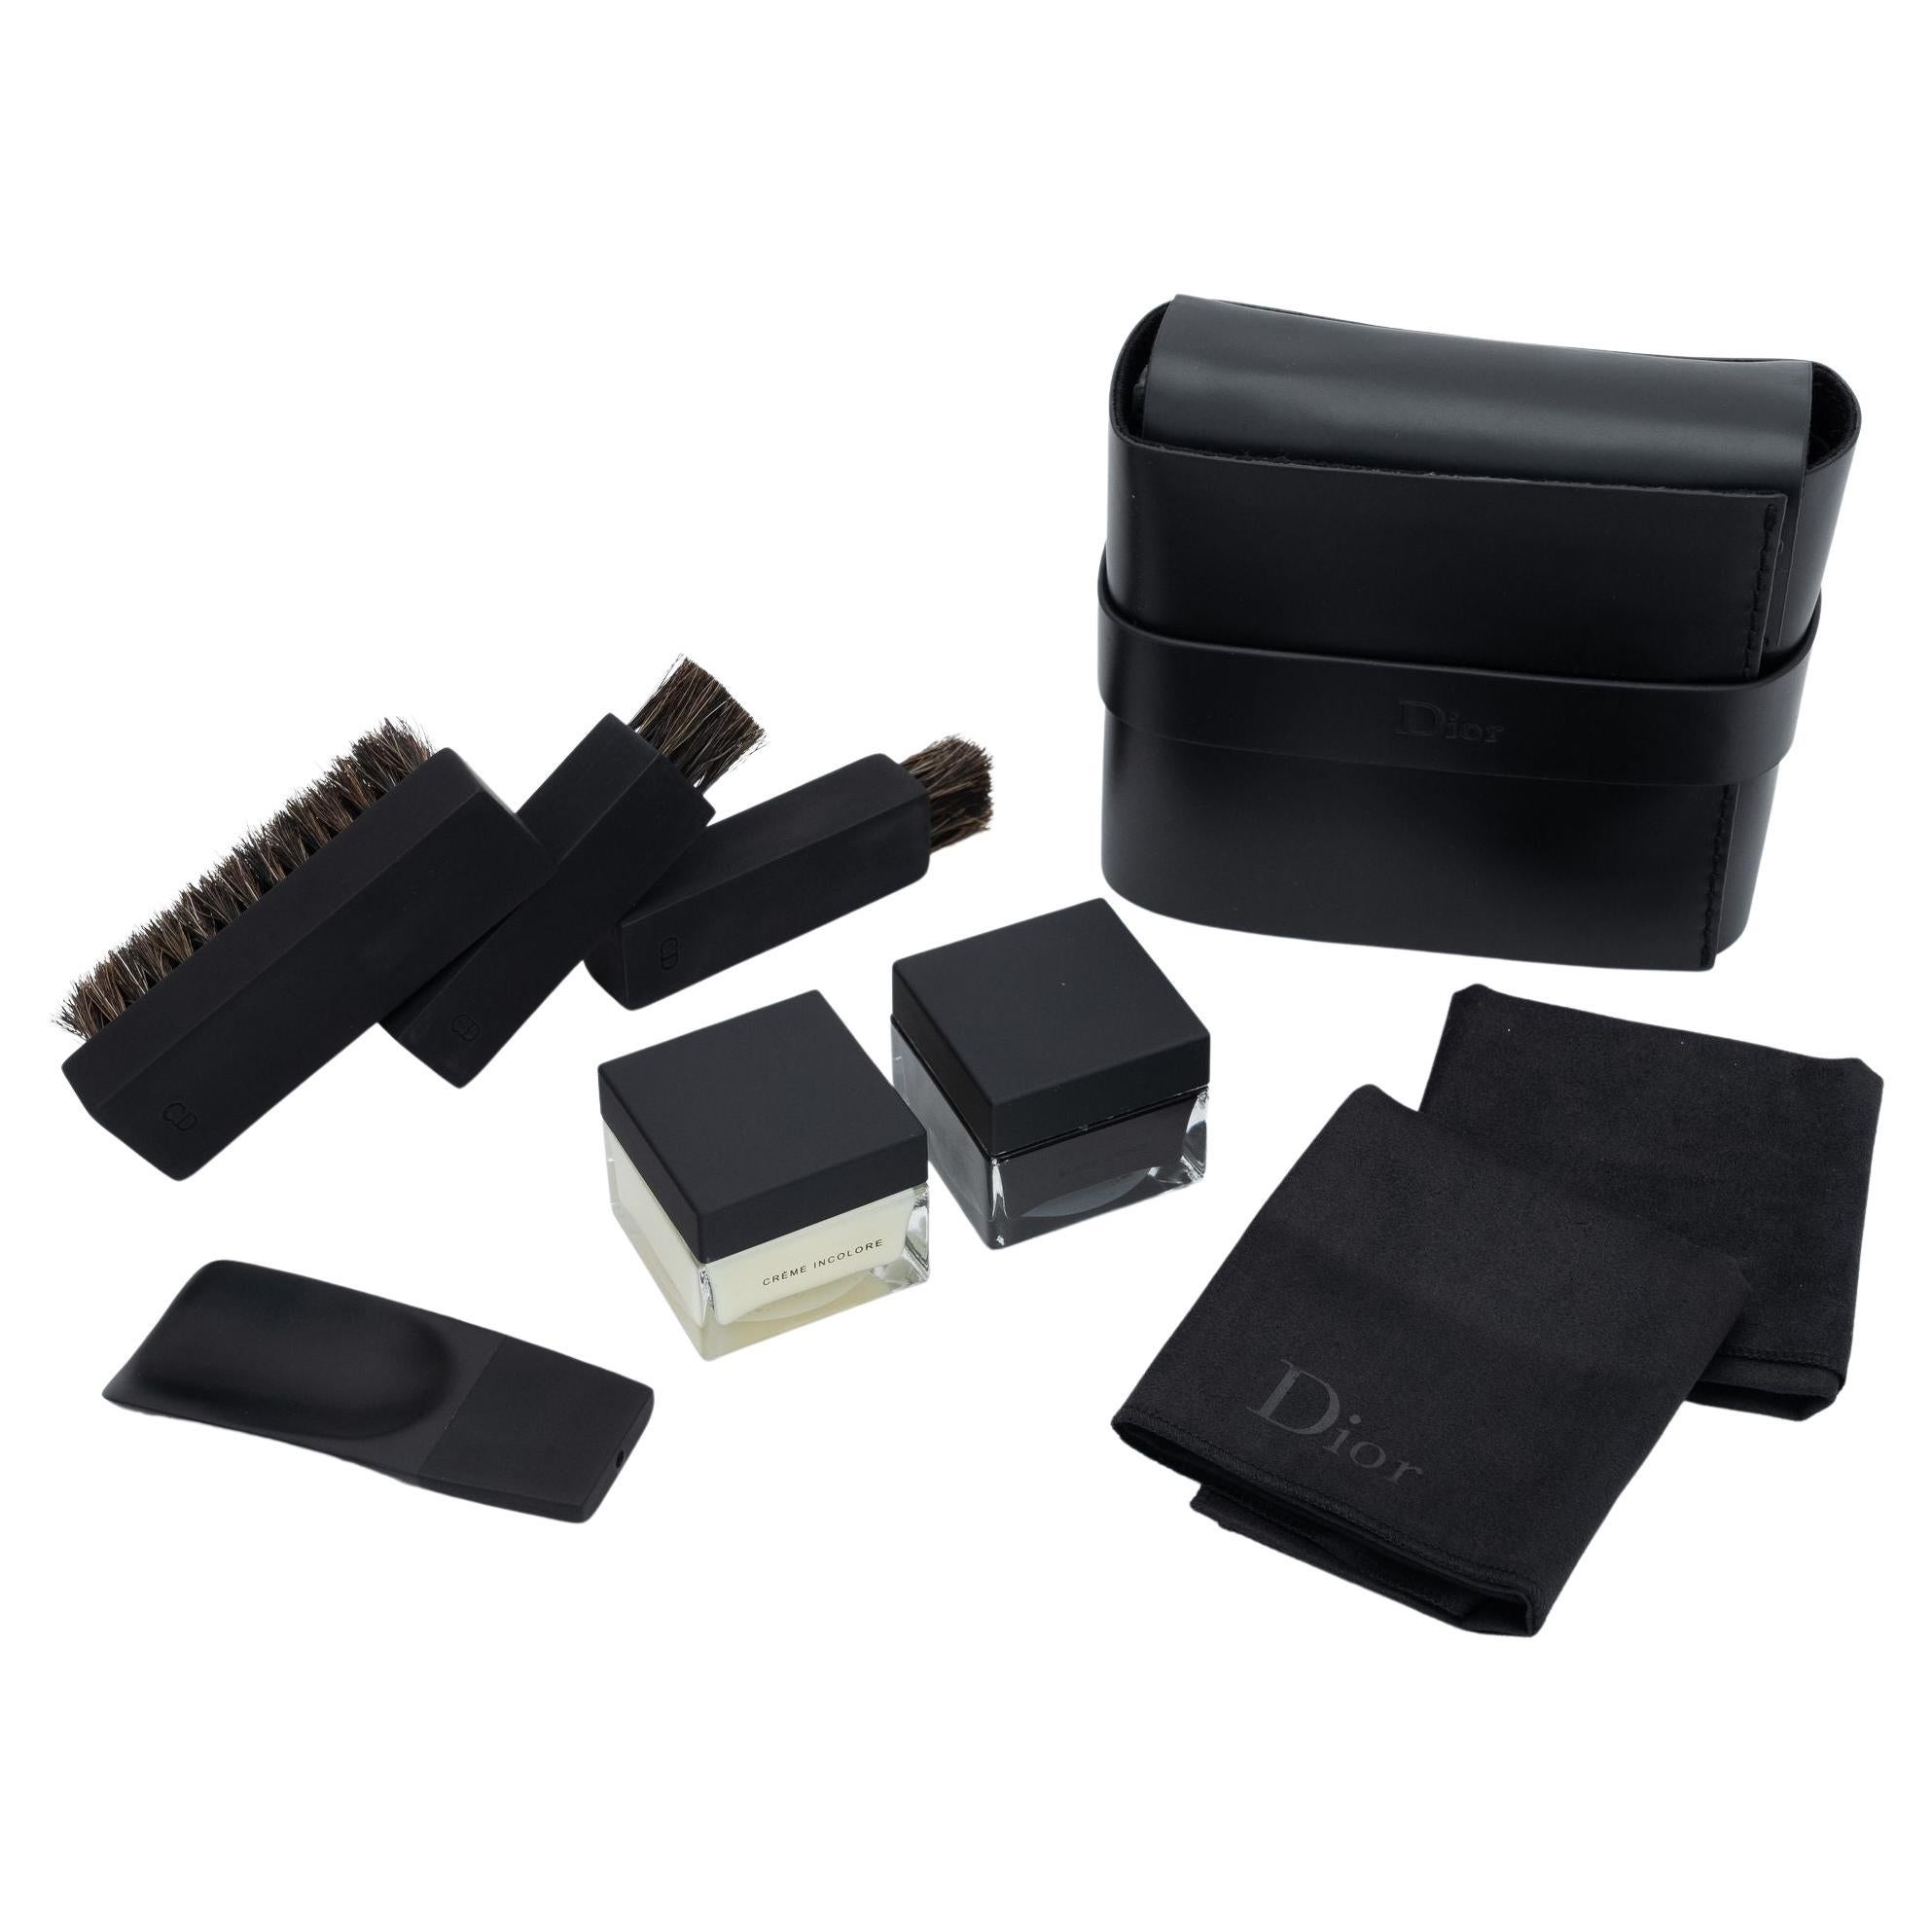 Dior NIB Black Leather Travel Shoe Kit For Sale